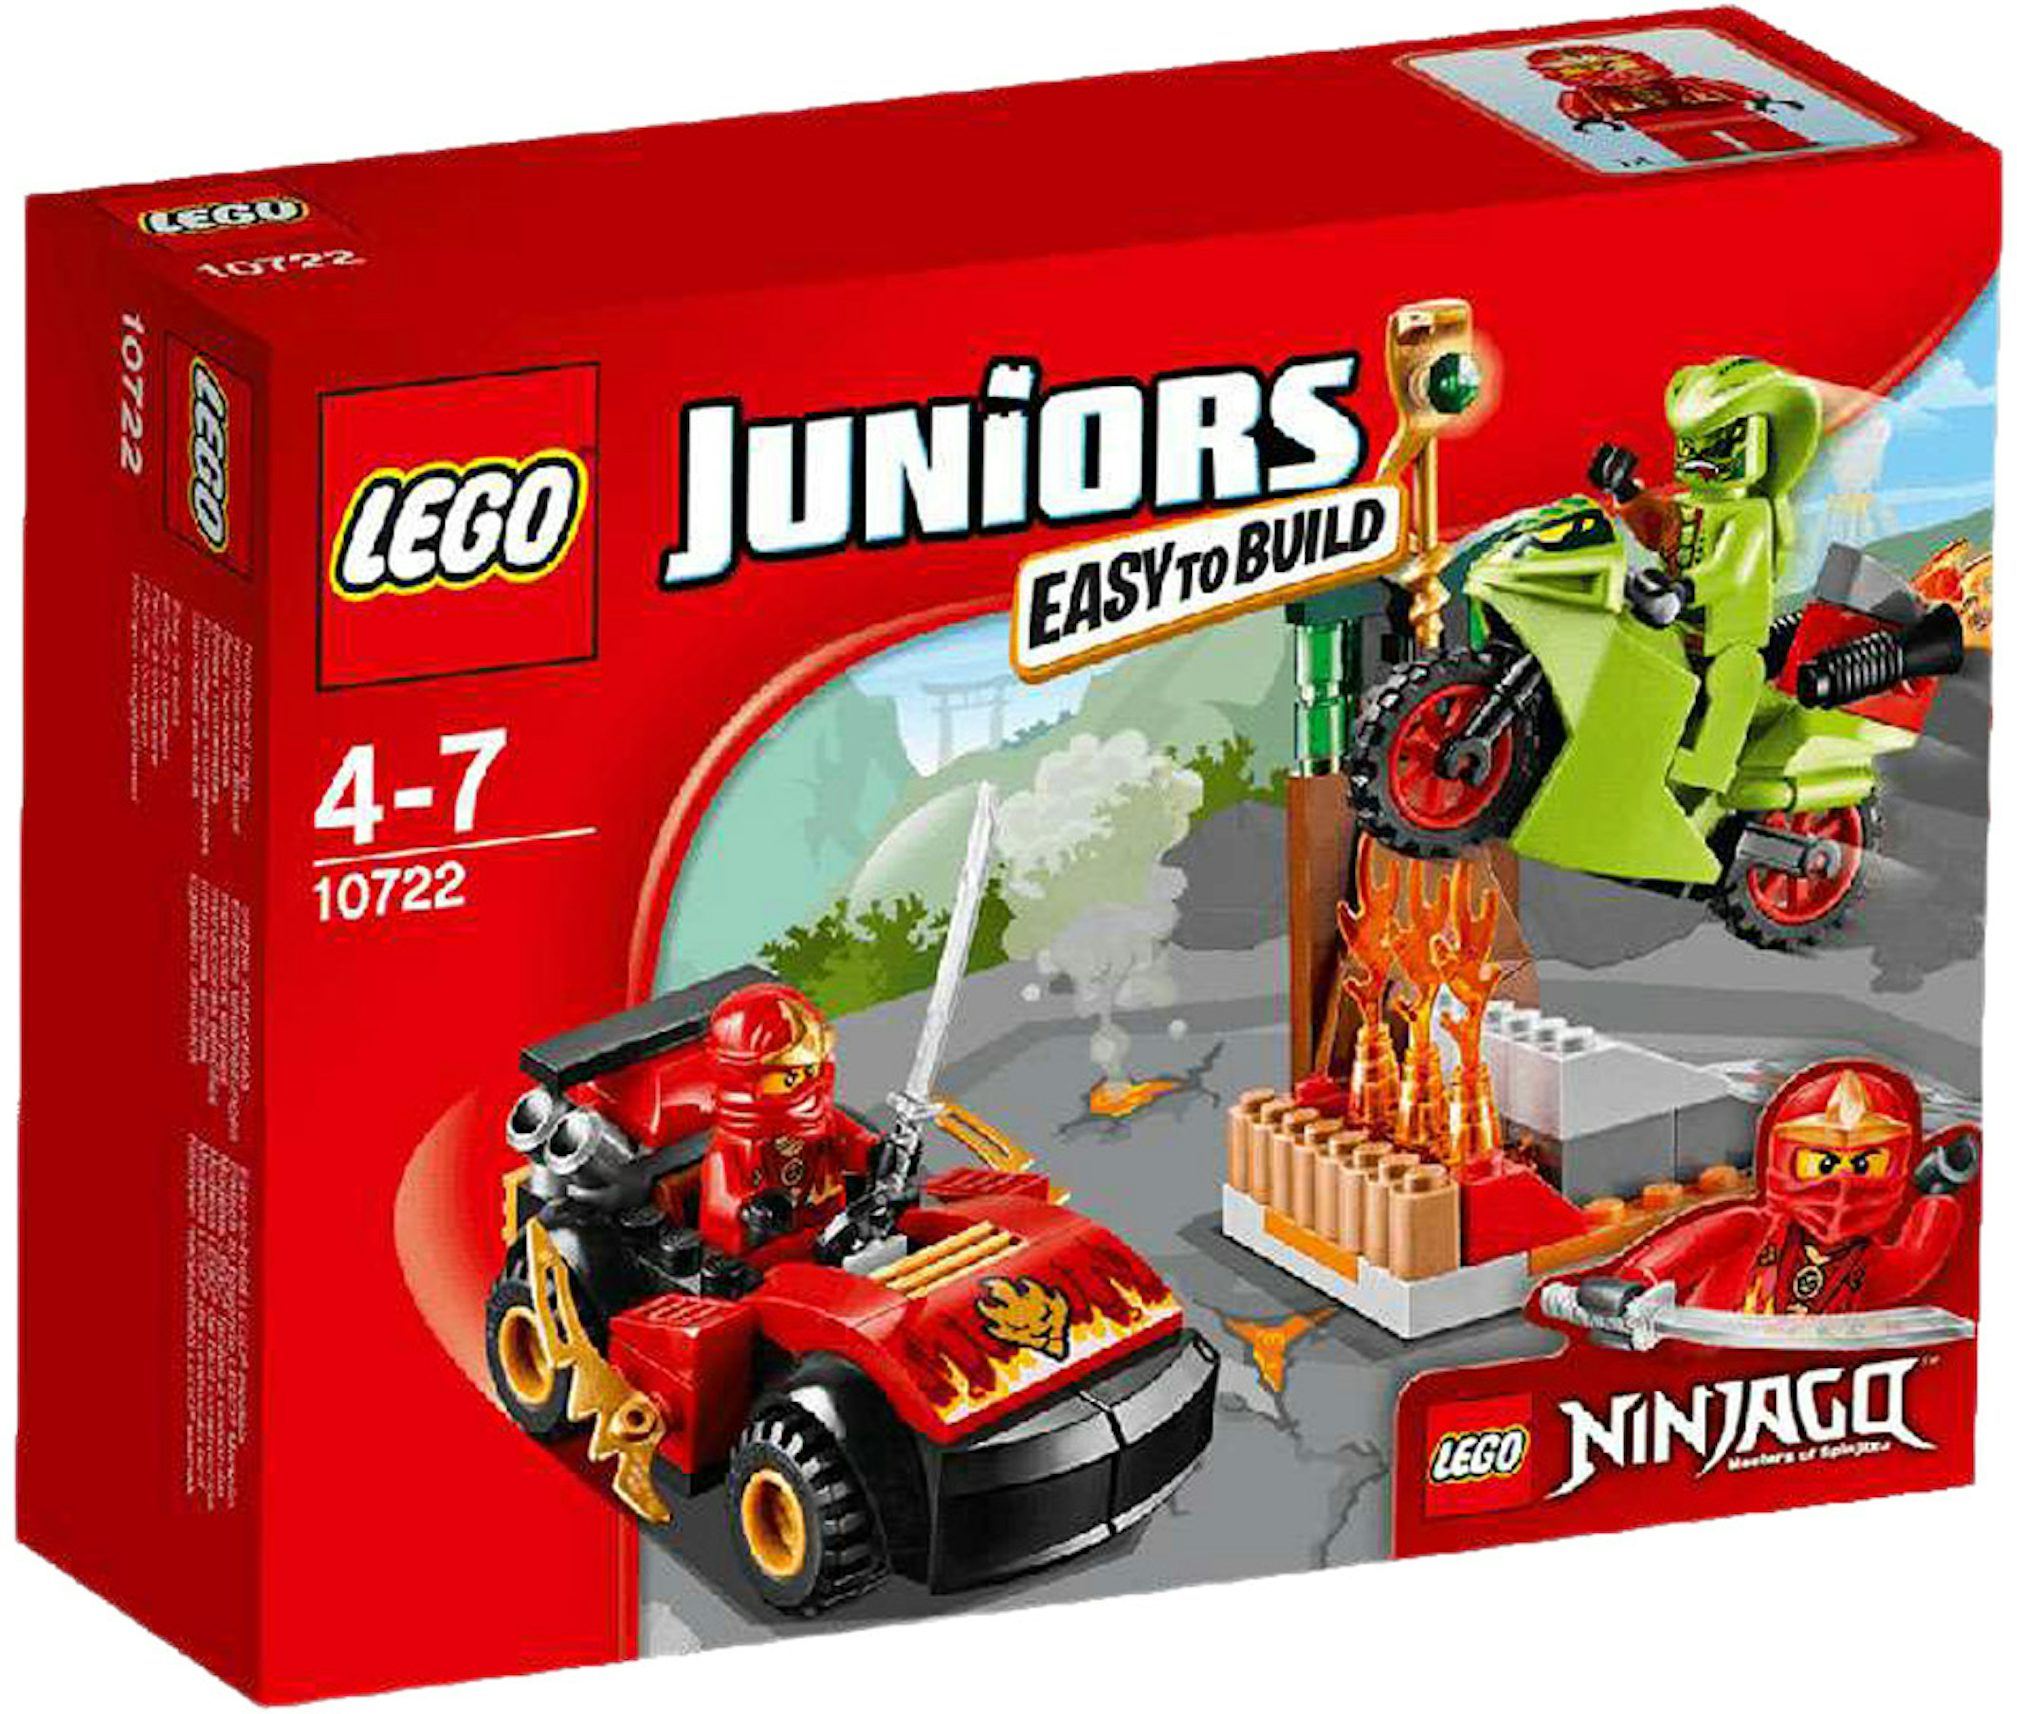 LEGO Ninjago Sorting Box 4084 - Fire Red - New